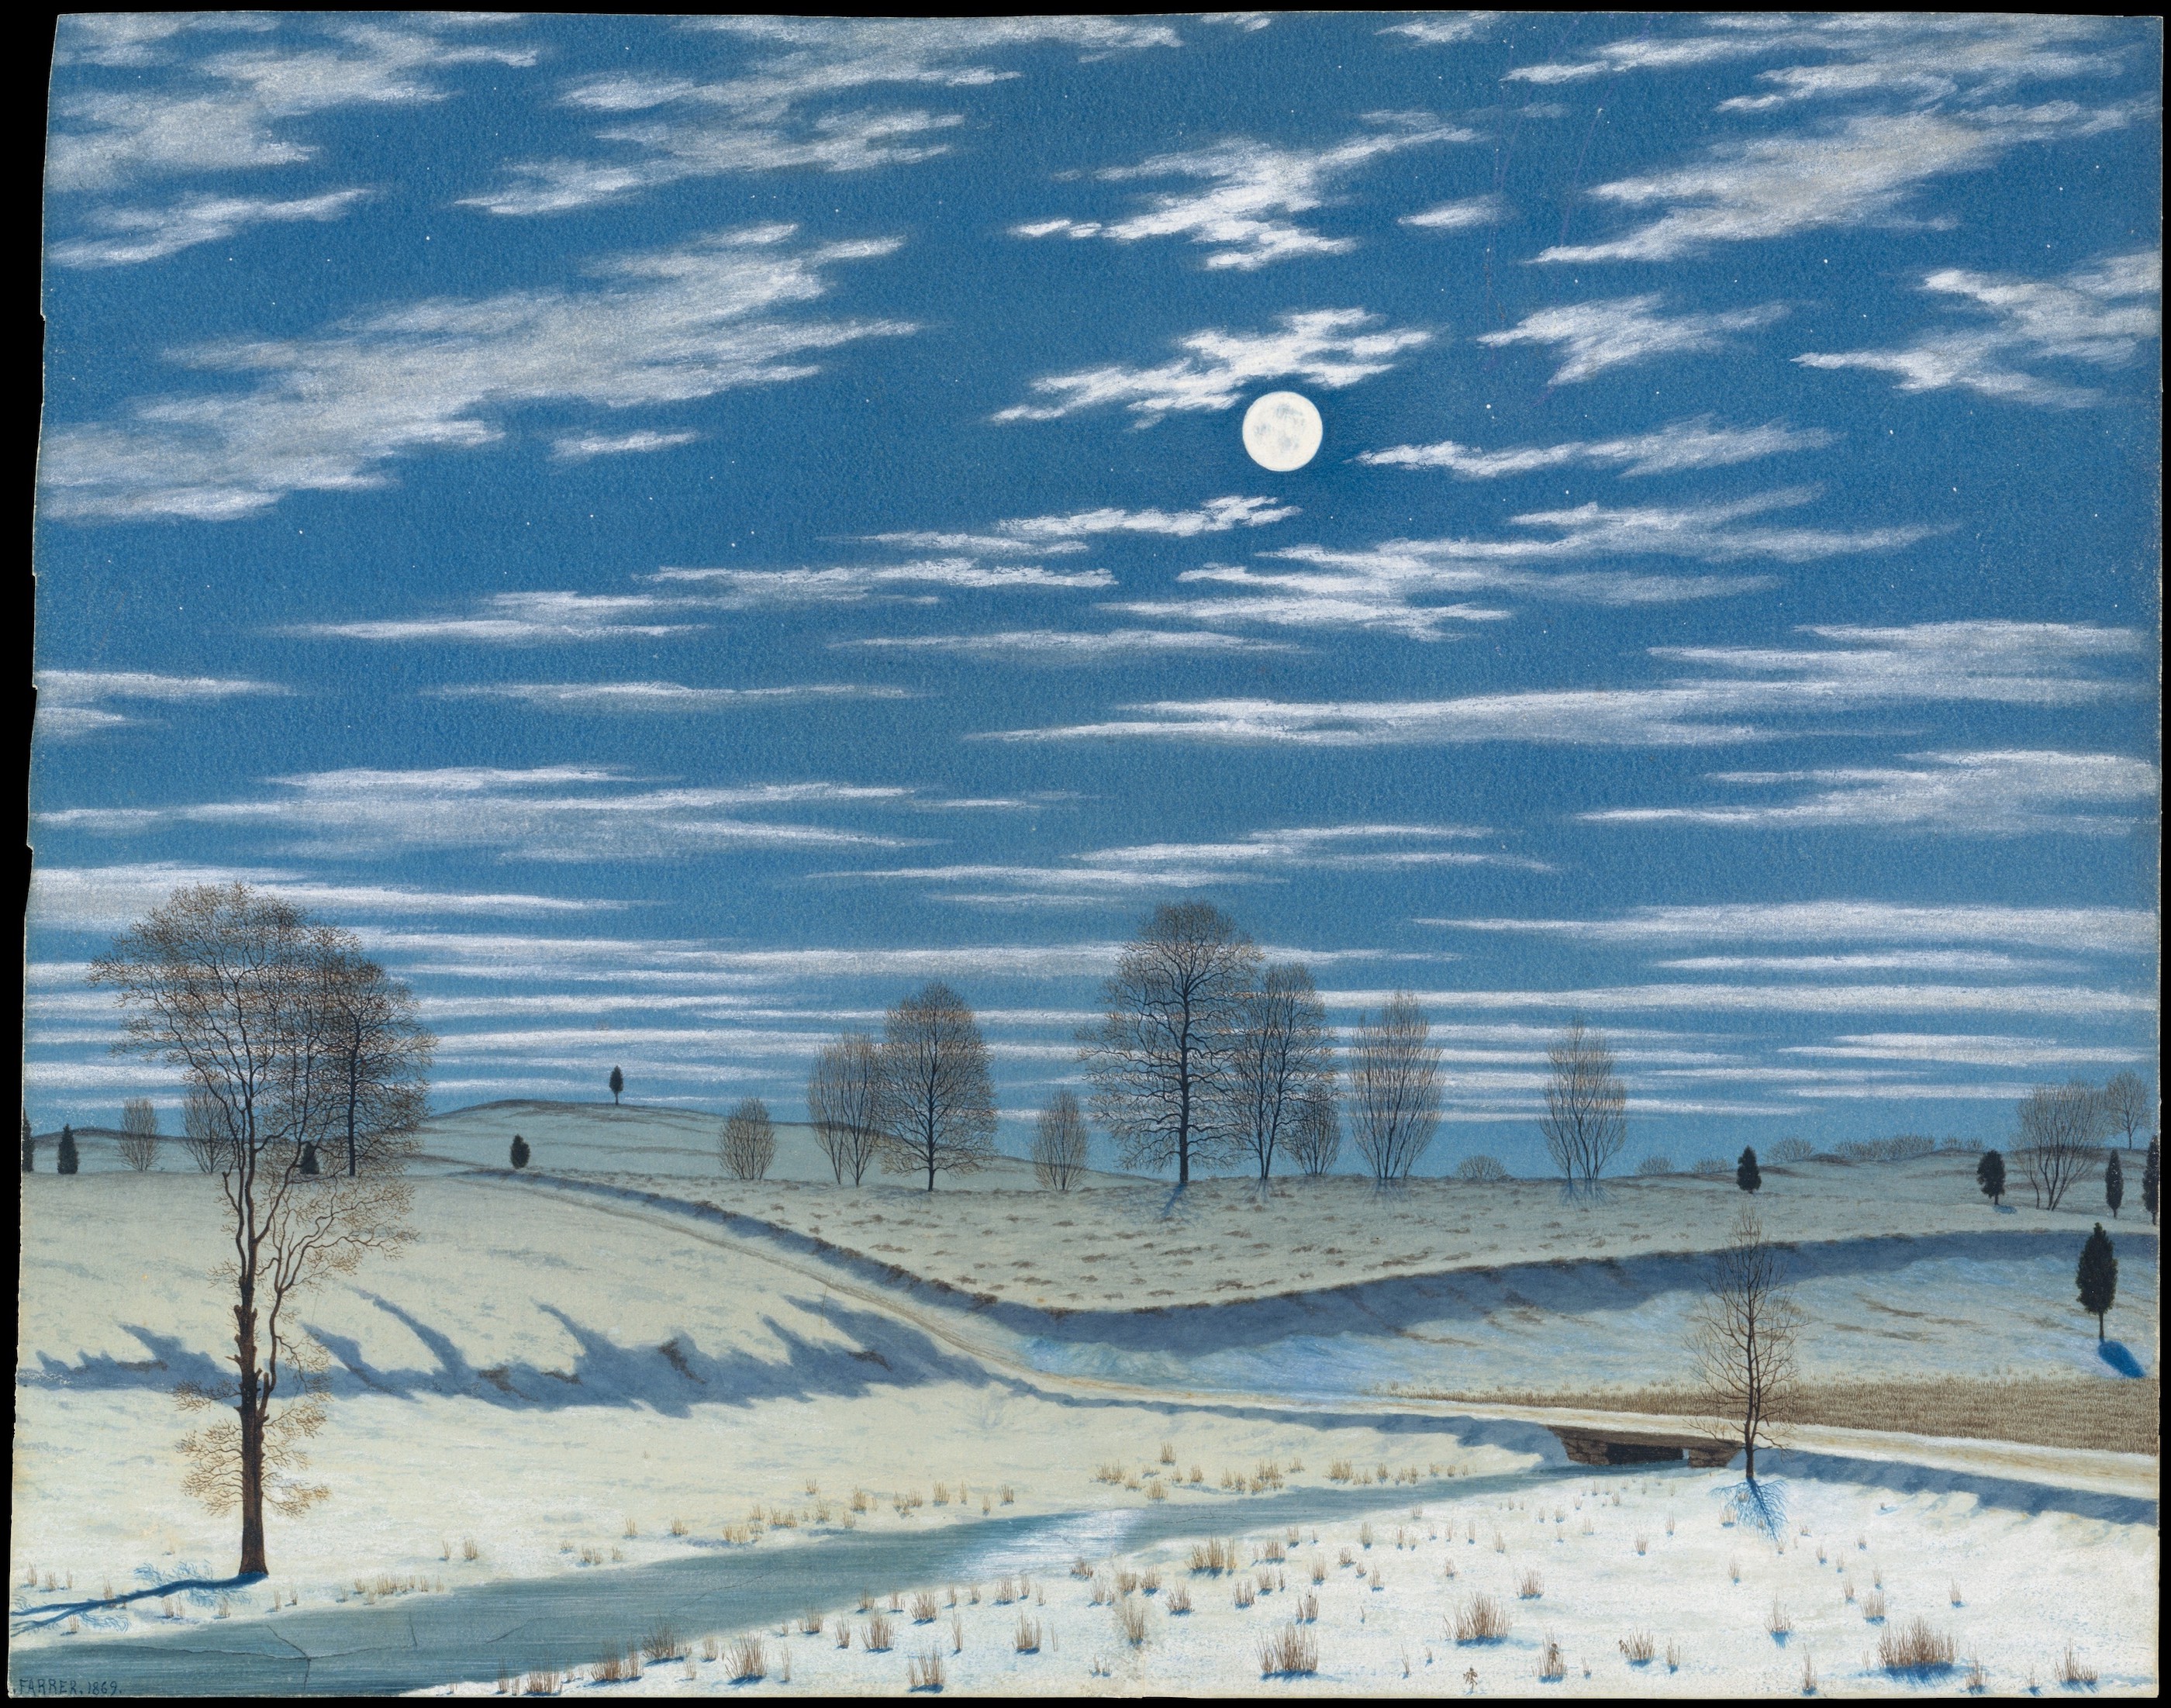 Winter Scene in Moonlight by Henry Farrer - 1869 - 30.2 x 38.6 cm Metropolitan Museum of Art